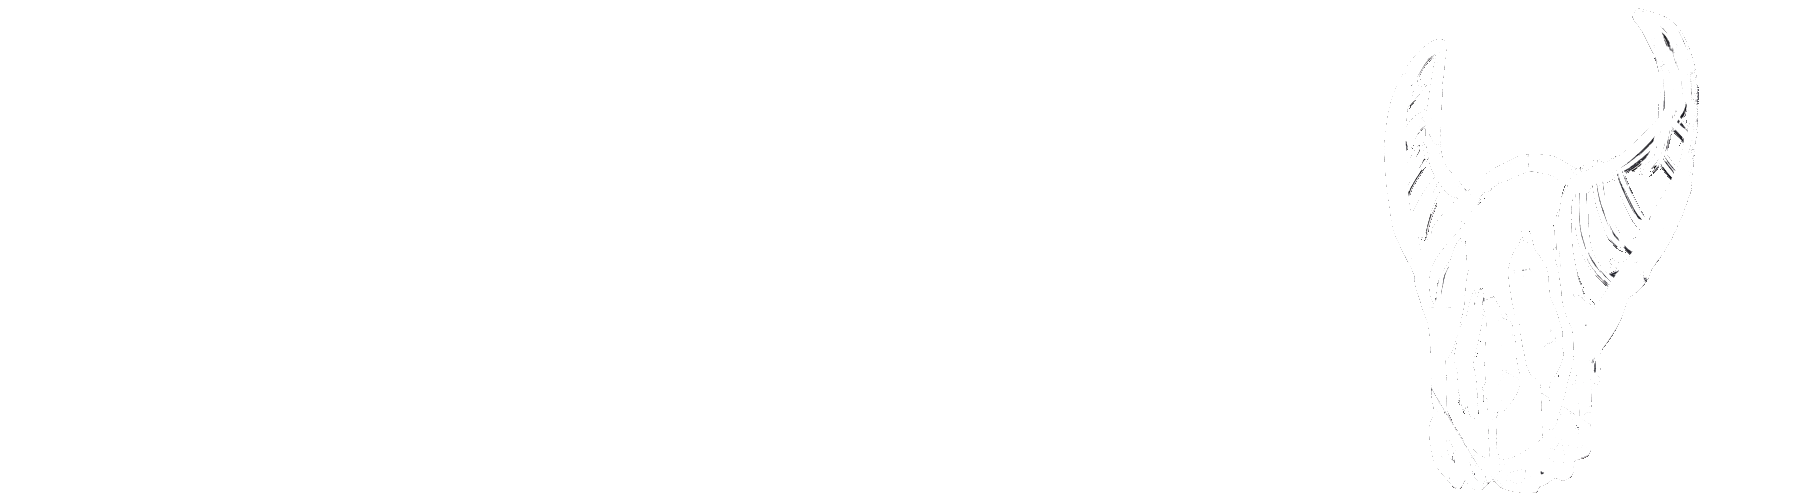 Rubicon Distribution